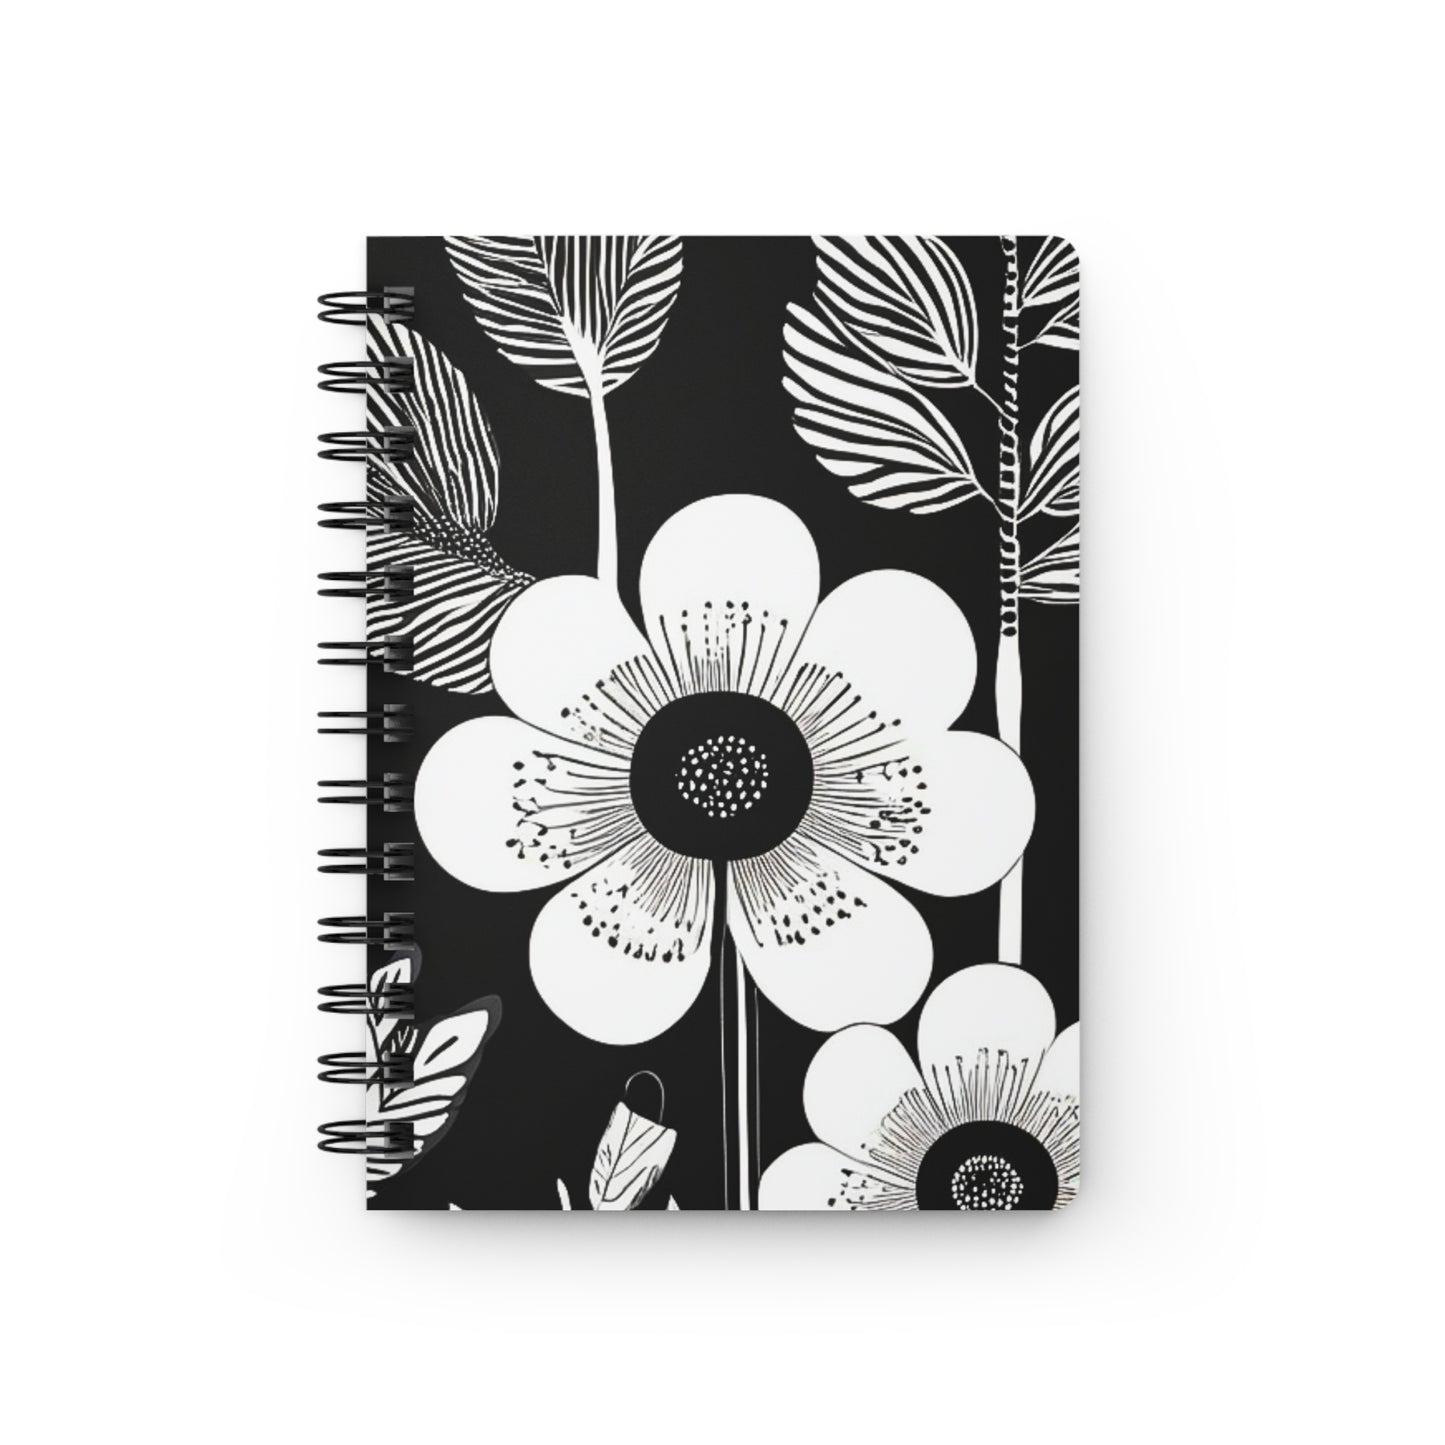 Black and White Poppies Mod Pop Art Decorative  Writing Sketch Inspiration Spiral Bound Journal